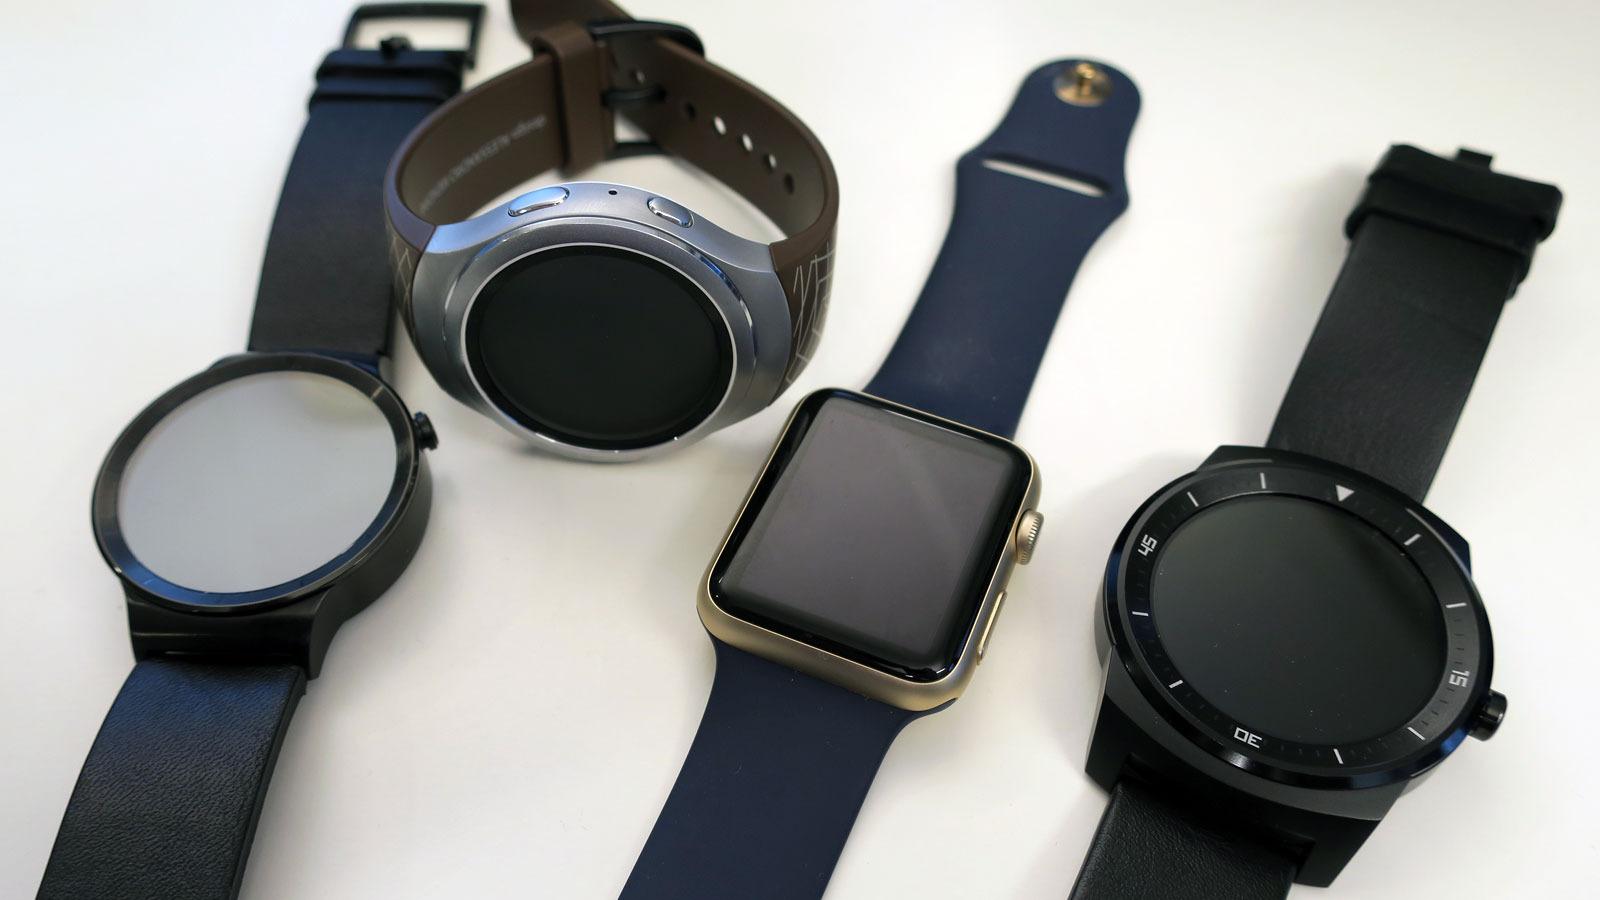 Fra venstre til høyre: Huawei Watch, Samsung Gear S2, Apple Watch og LG Gwatch R. . Foto: Espen Irwing Swang, Tek.no